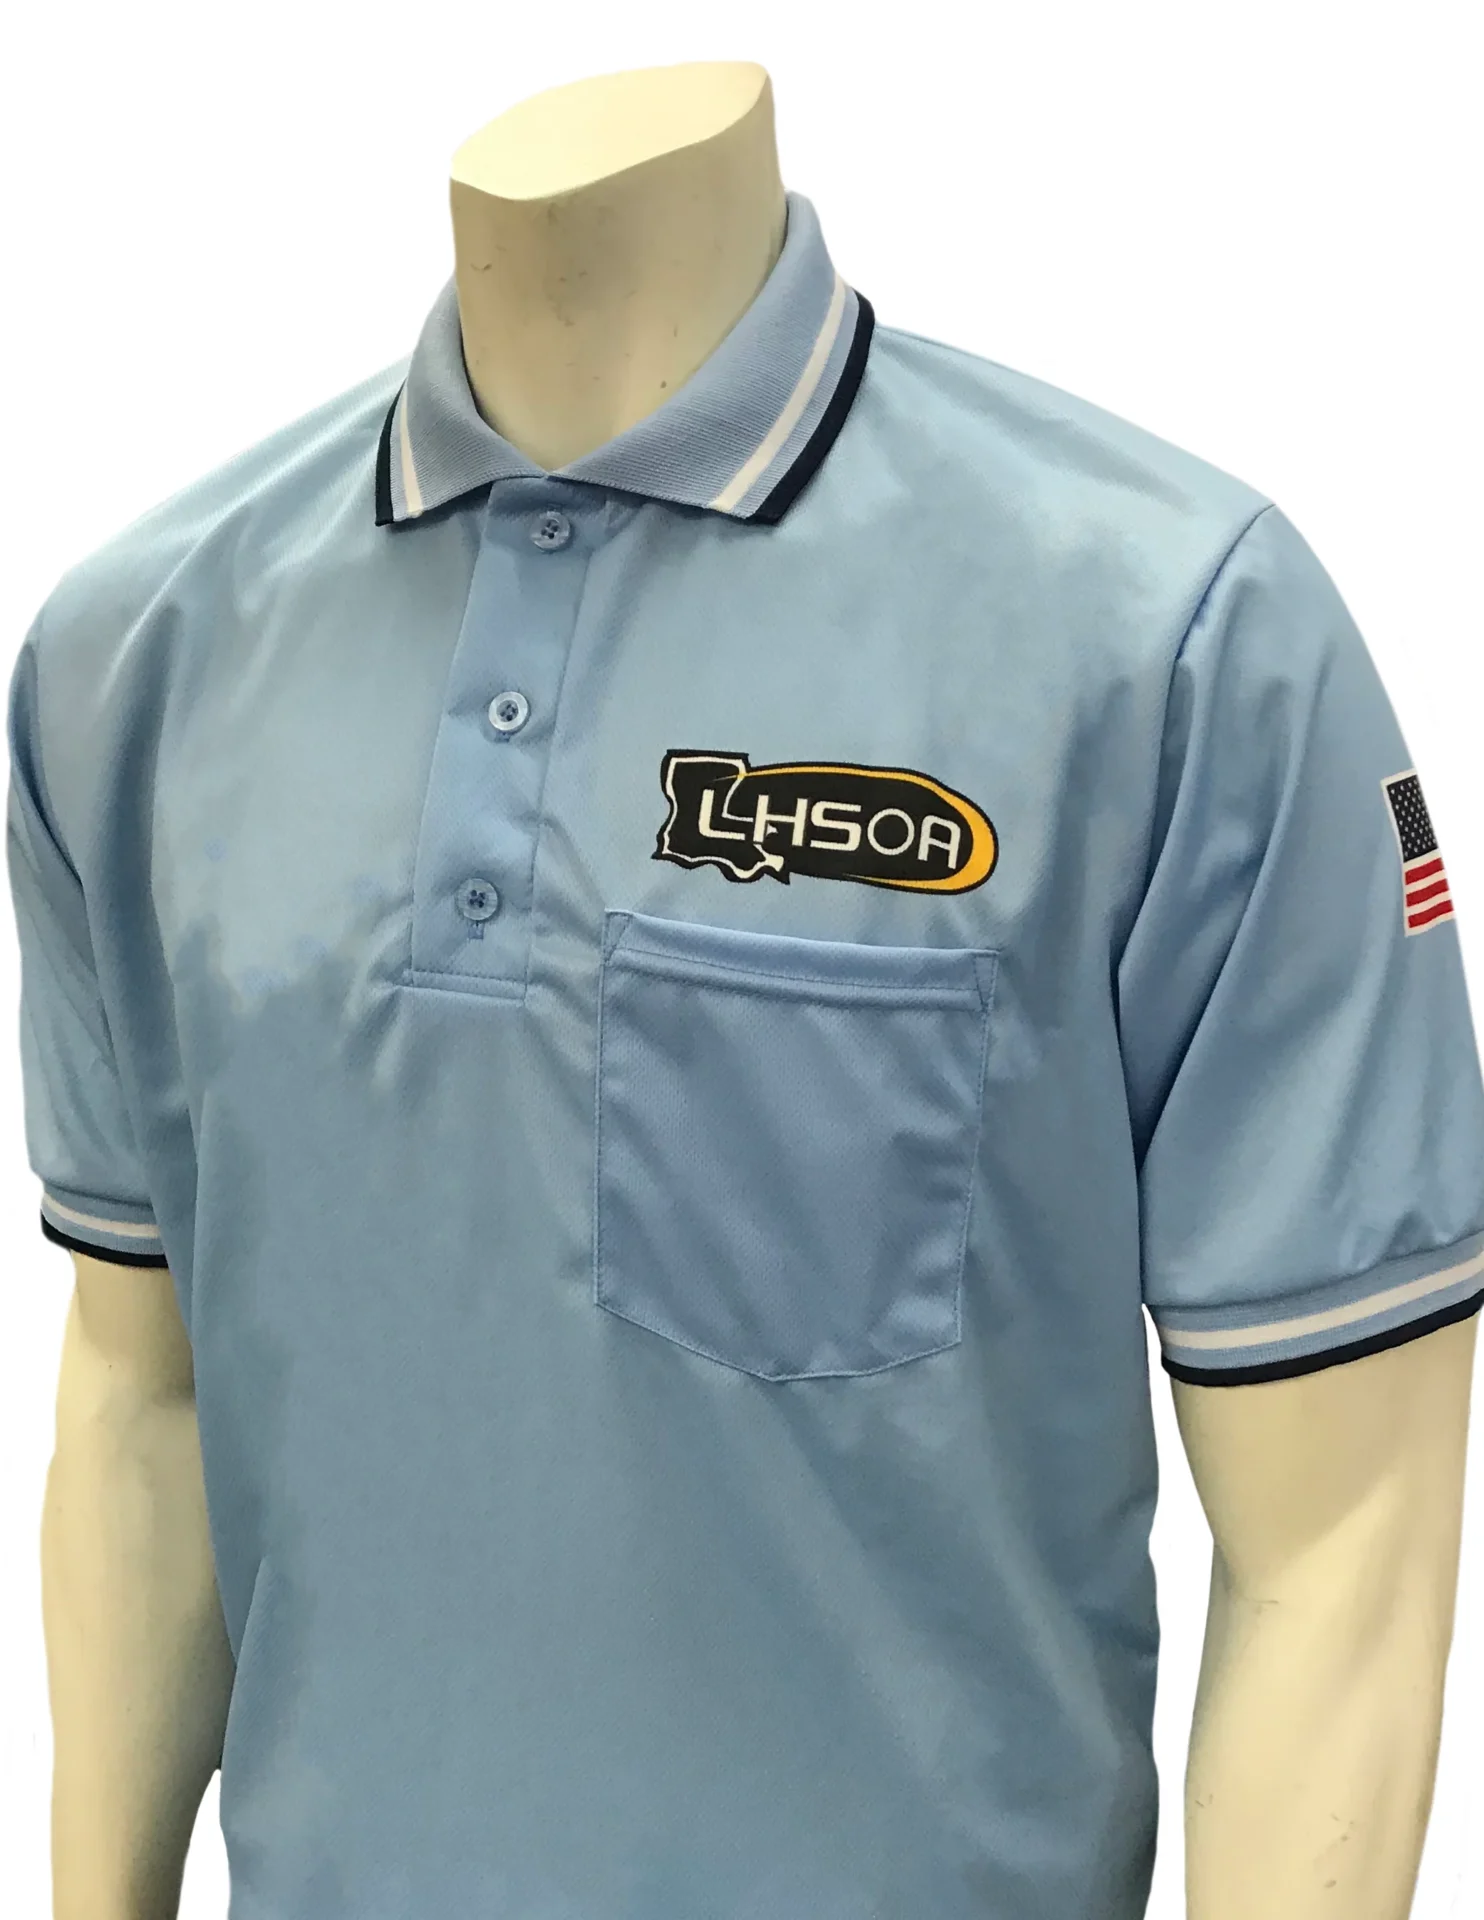 A light blue umpire shirt with an embroidered logo.